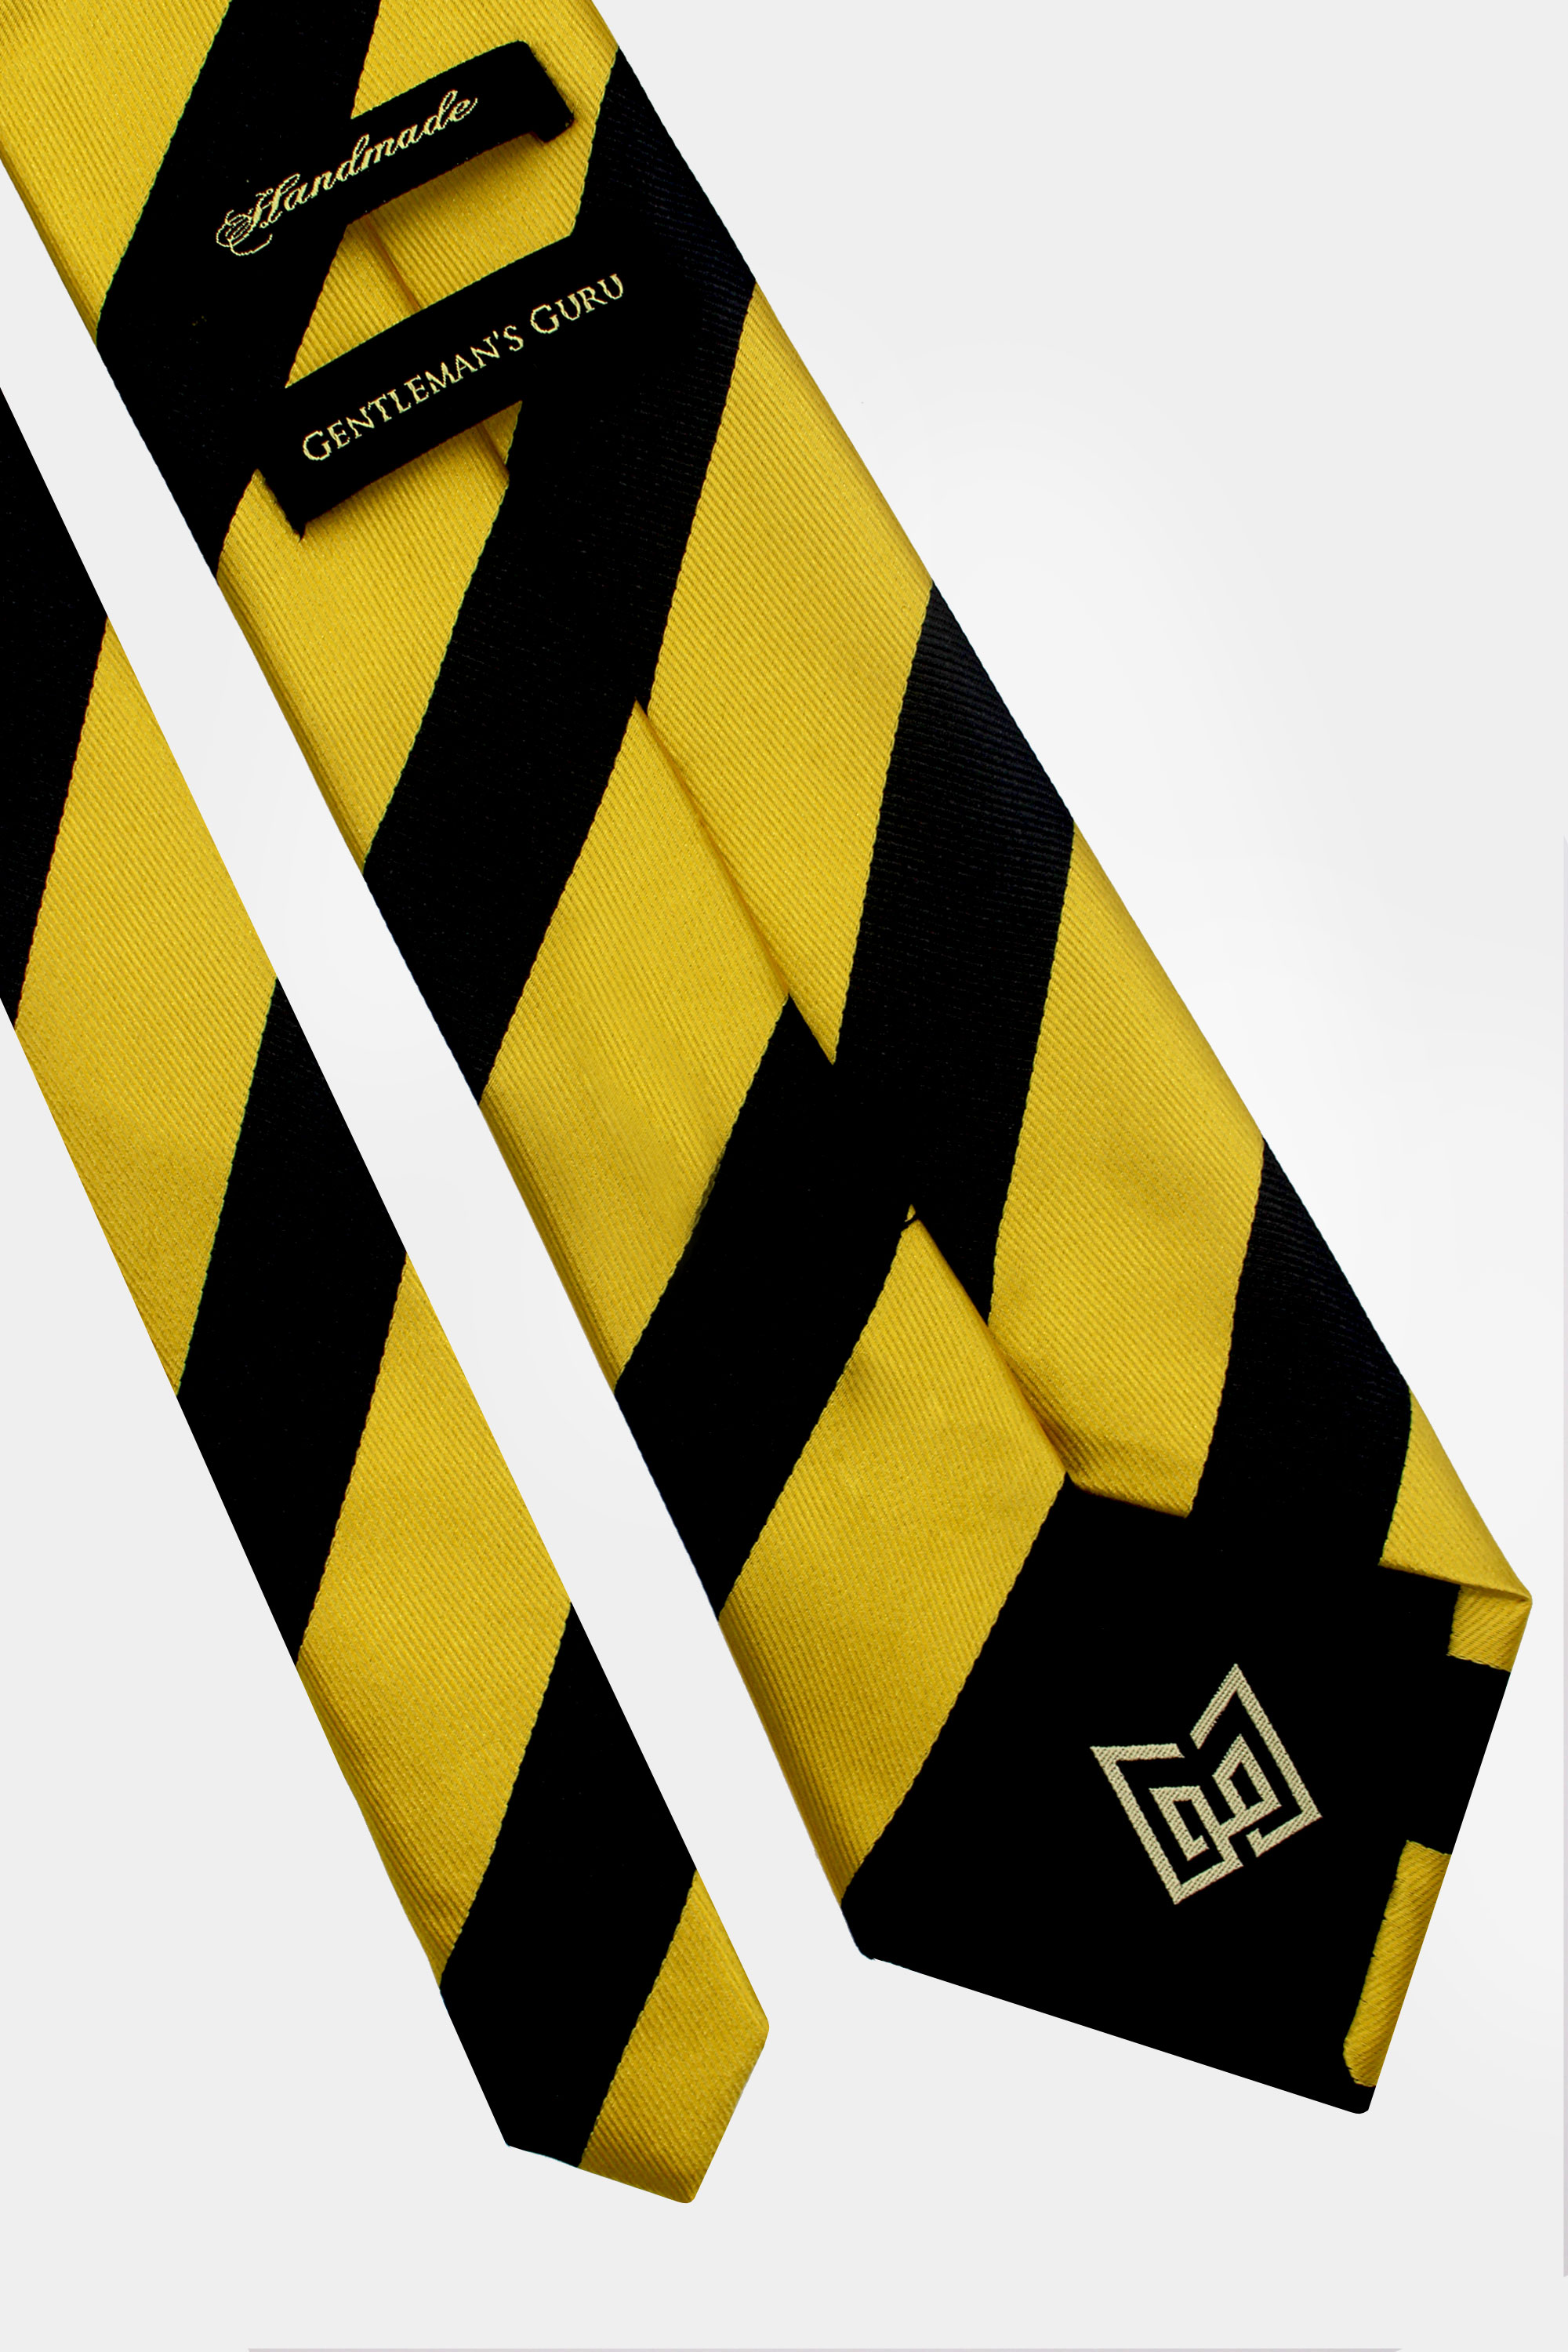 Black-and-Gold-Striped-Tie-from-Gentlemansguru.com